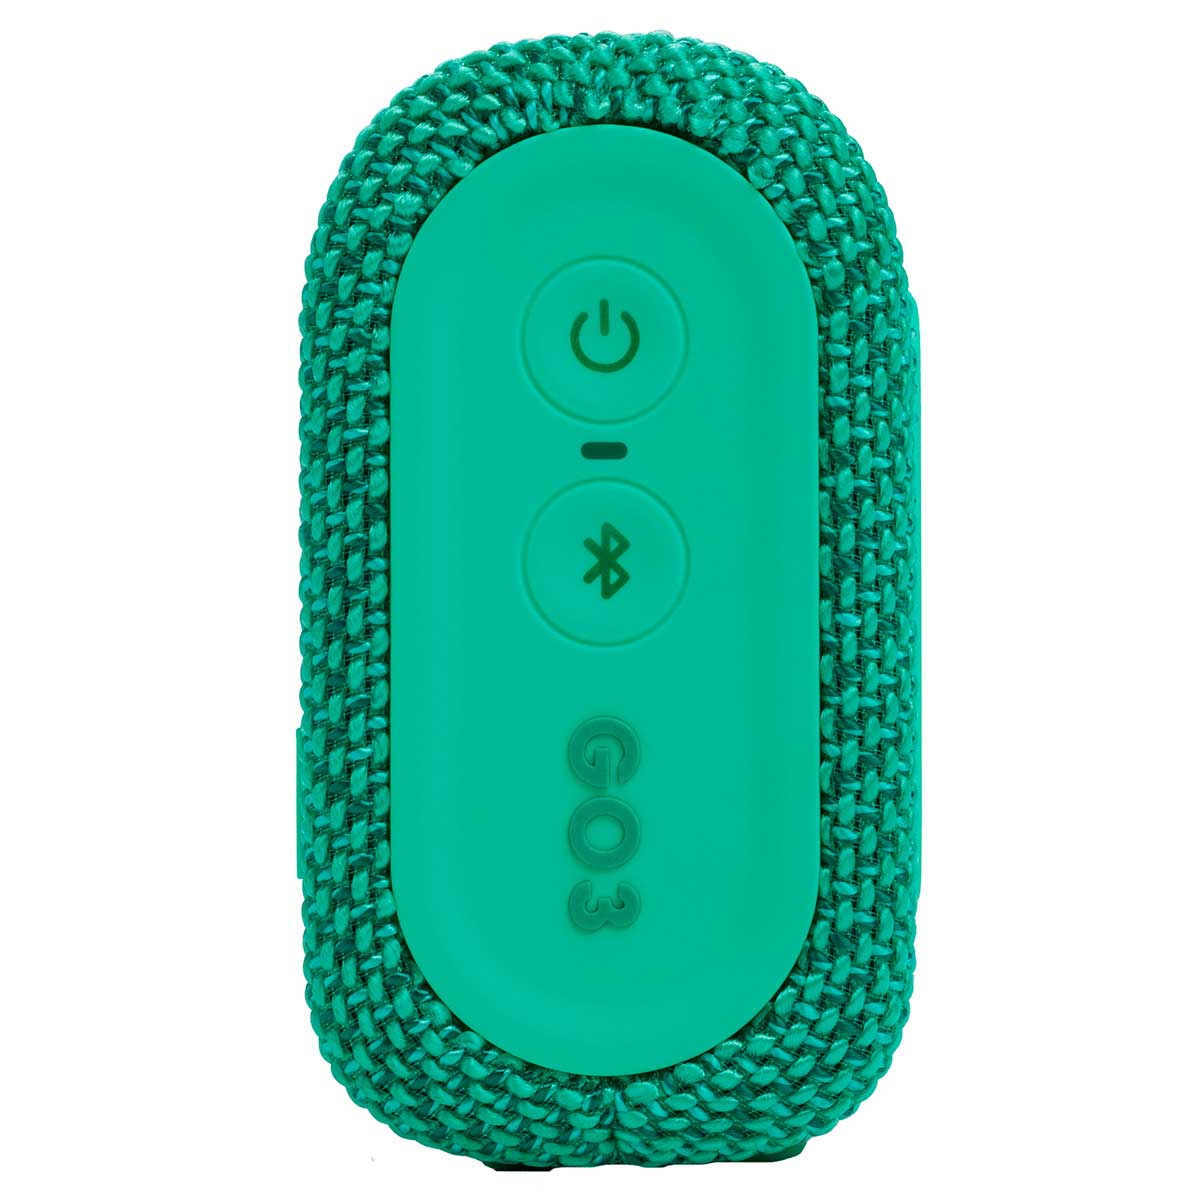 bluetooth-speaker-jbl-go3-eco-green-5.jpg